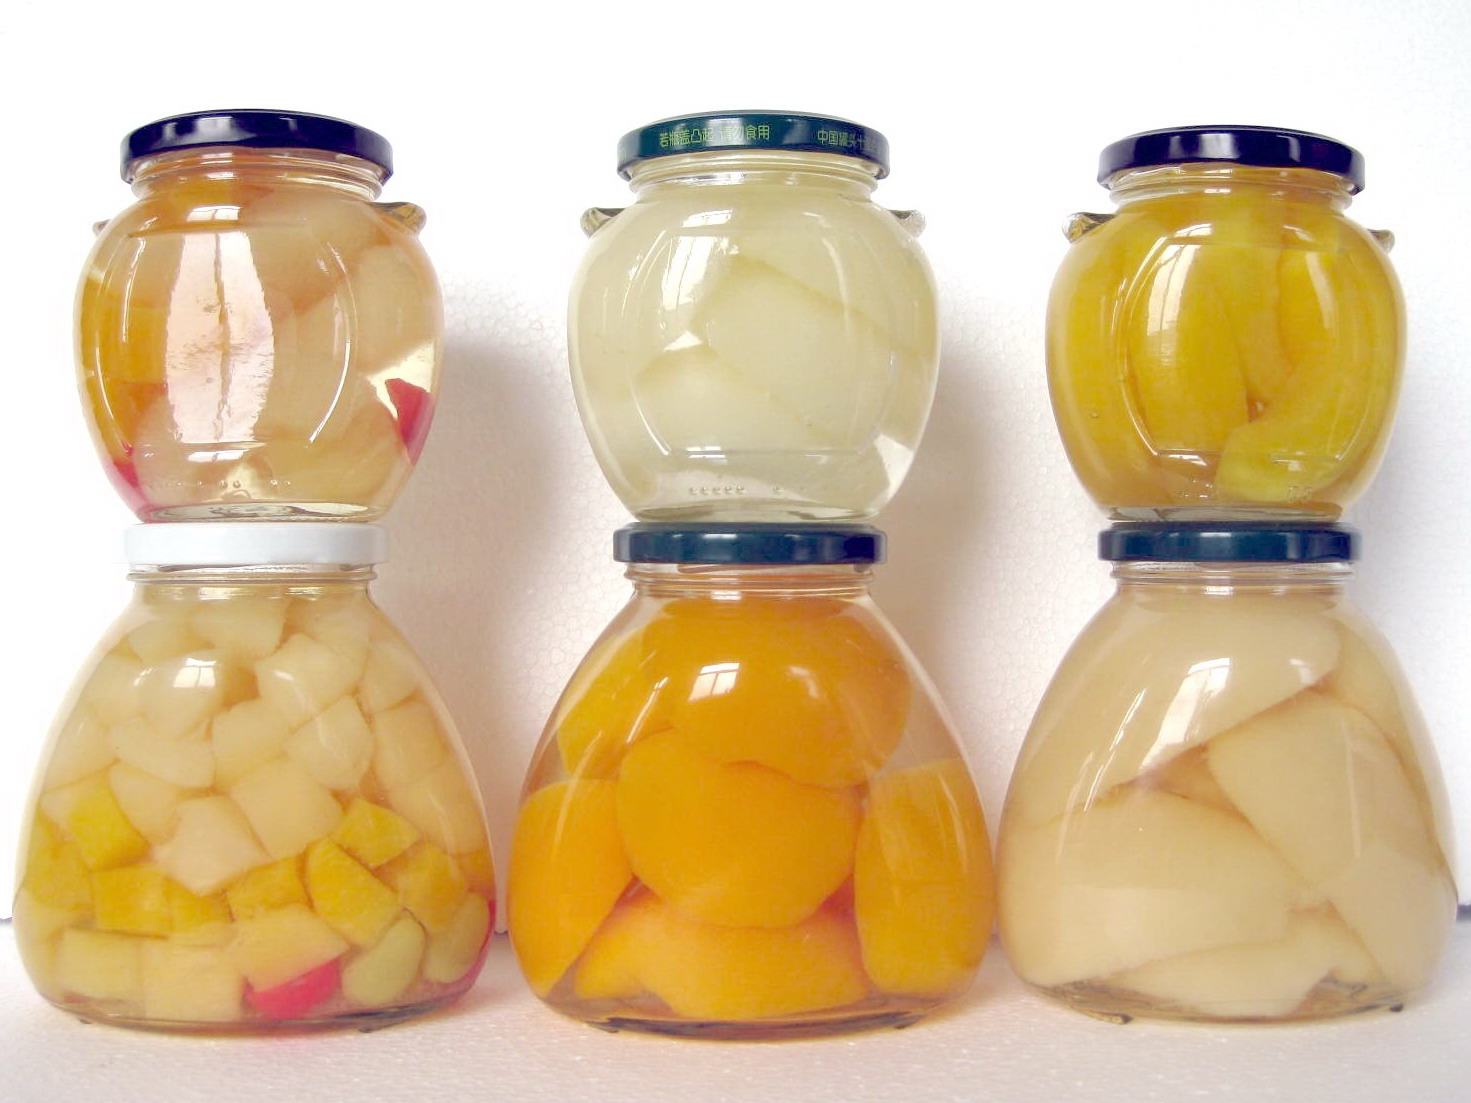 Cockail Fruits in Jars